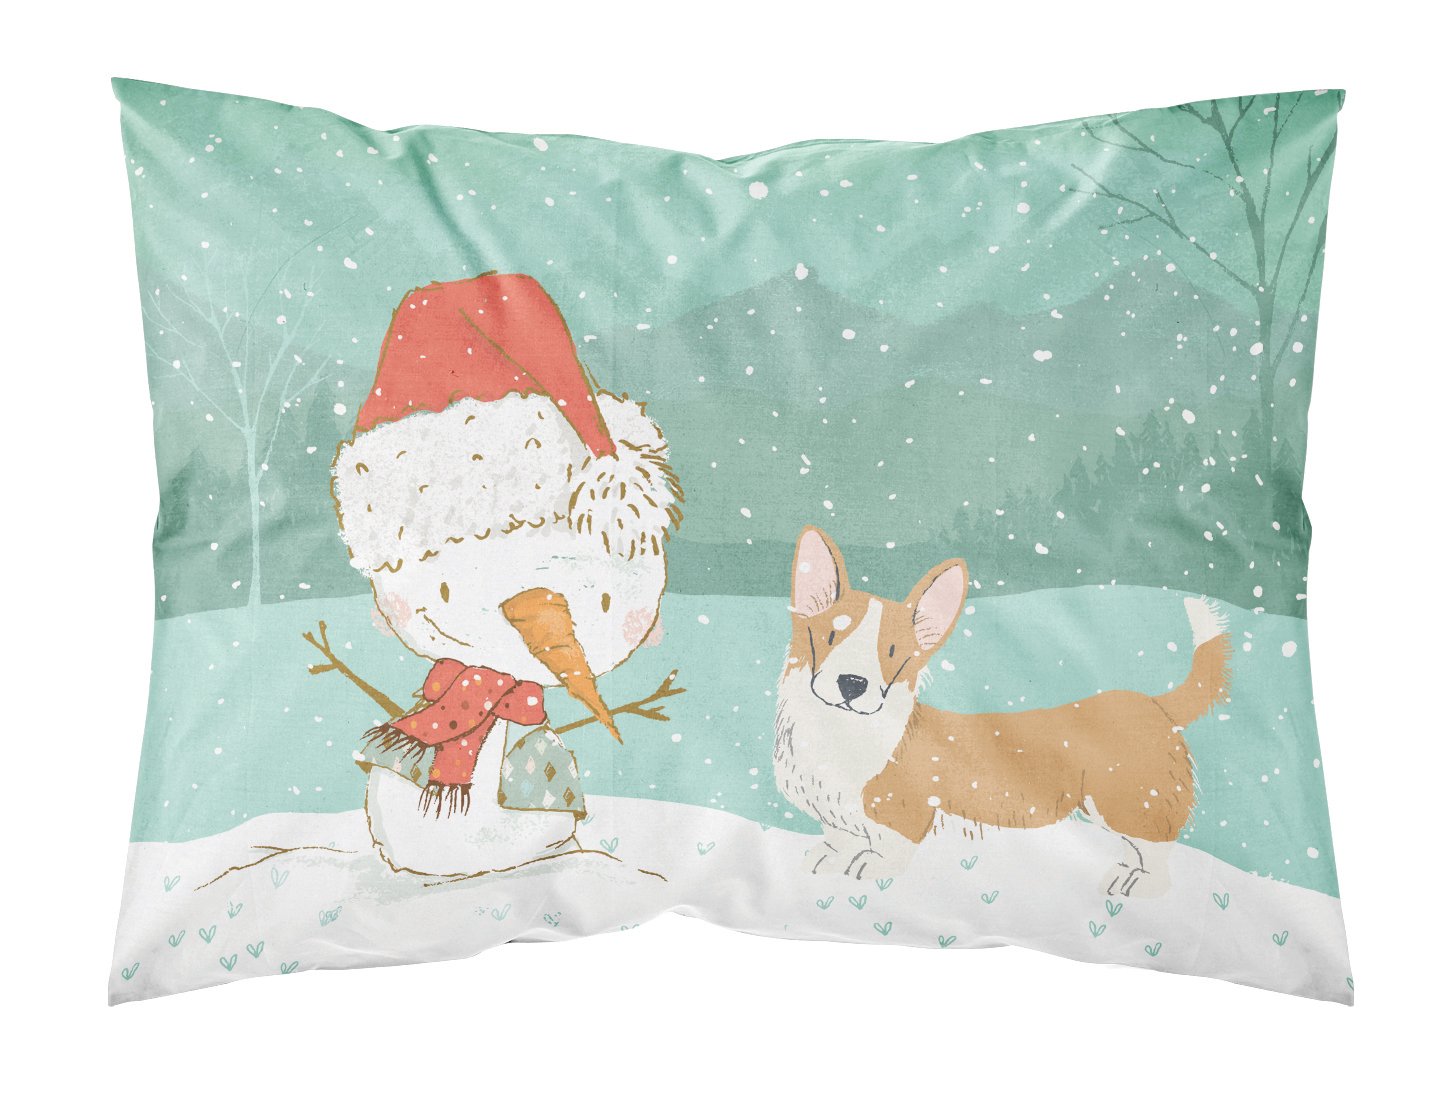 Cardigan Corgi Snowman Christmas Fabric Standard Pillowcase CK2063PILLOWCASE by Caroline's Treasures